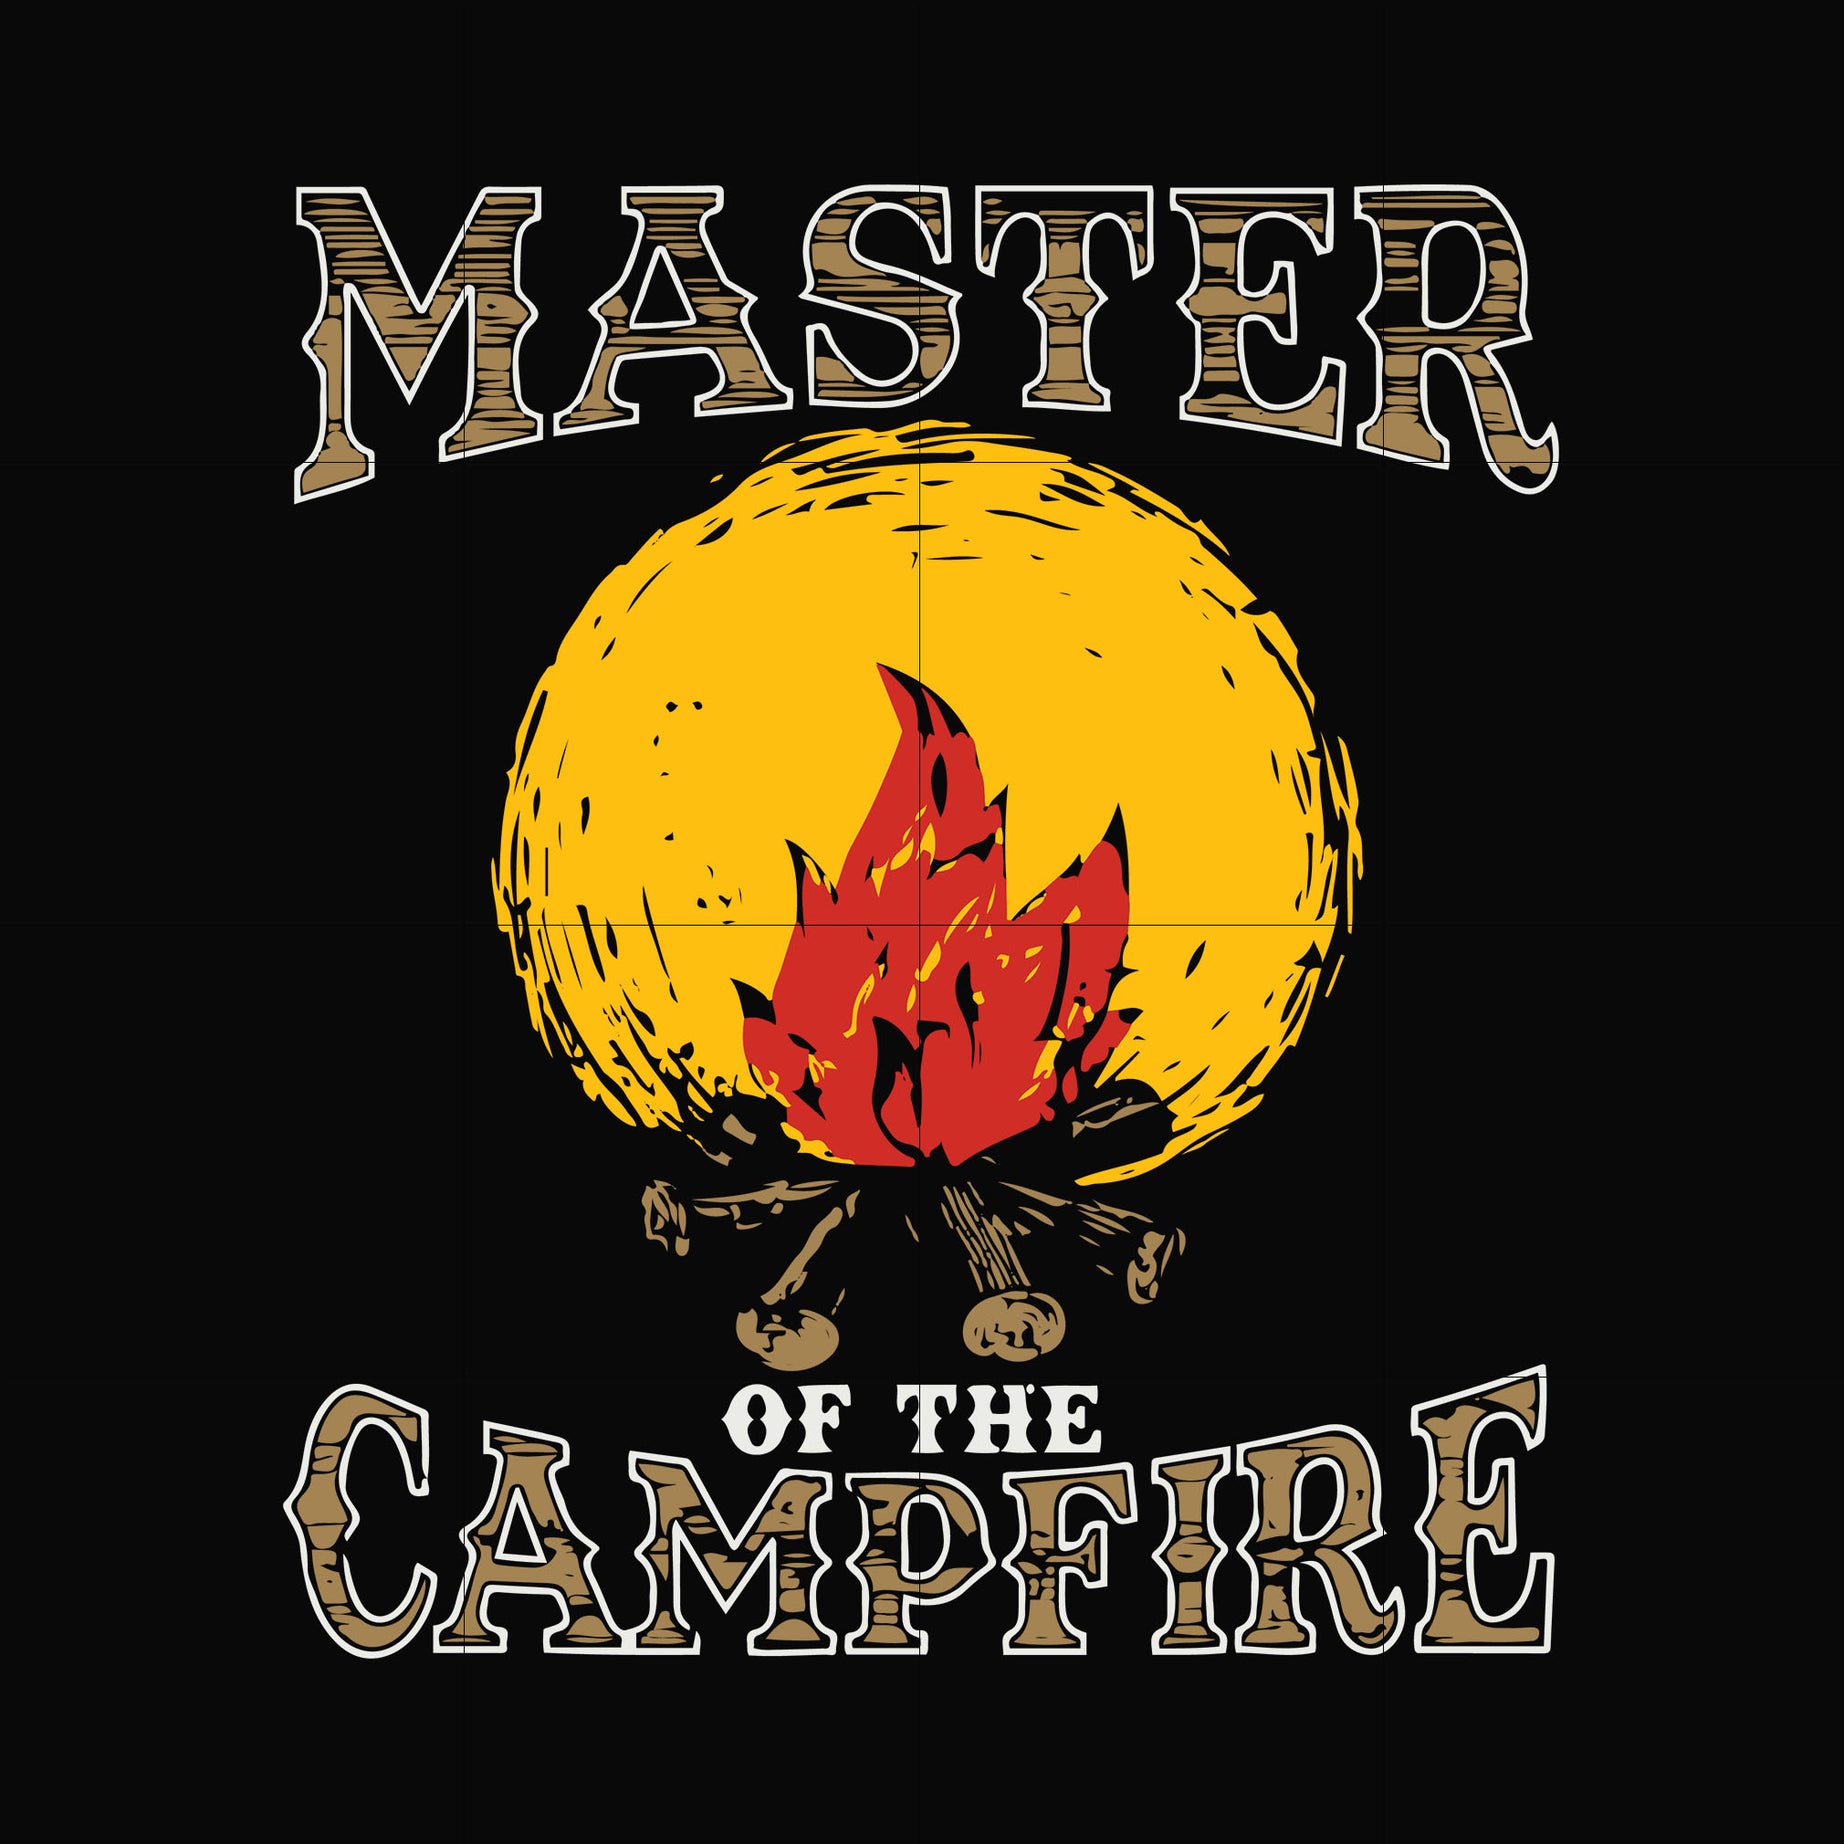 Master of the campfire svg, png, dxf, eps digital file CMP082